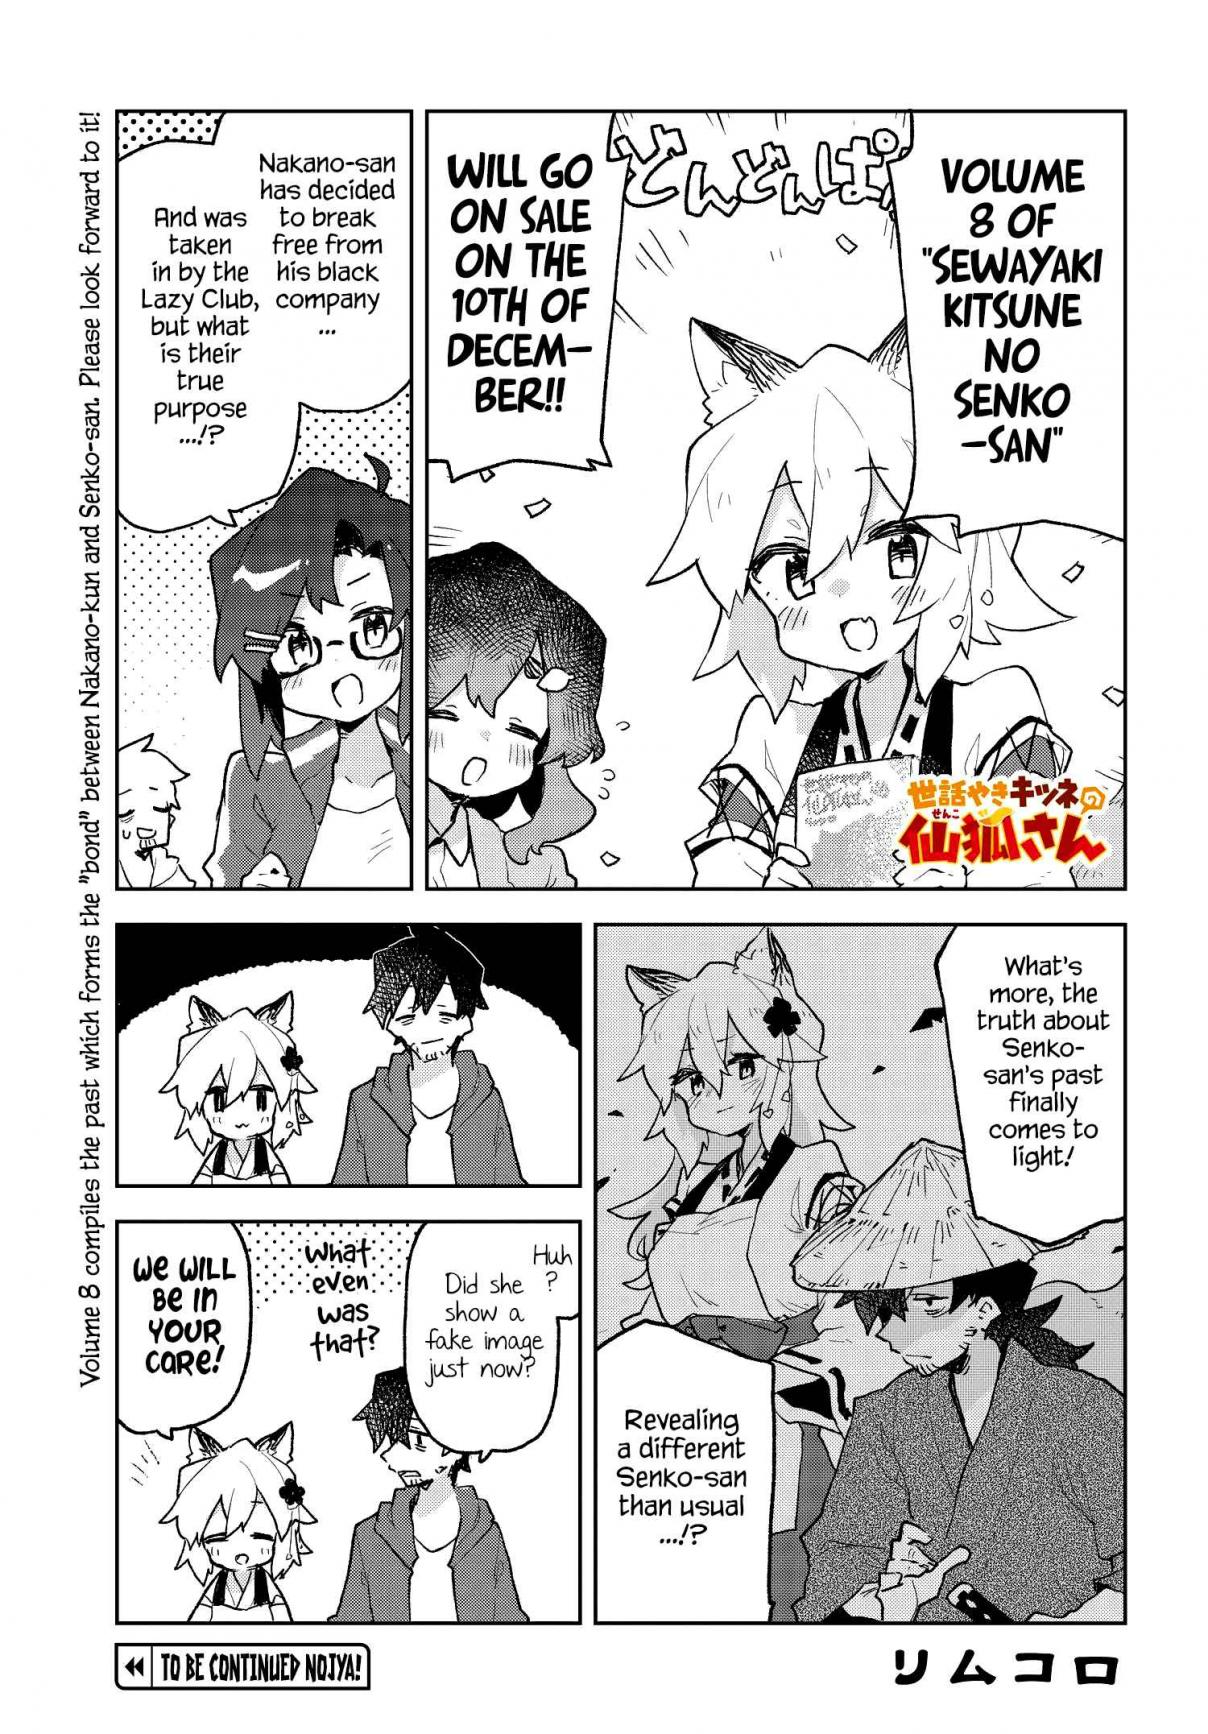 Sewayaki Kitsune no Senko san Ch. 61.6 Volume 8 Announcement